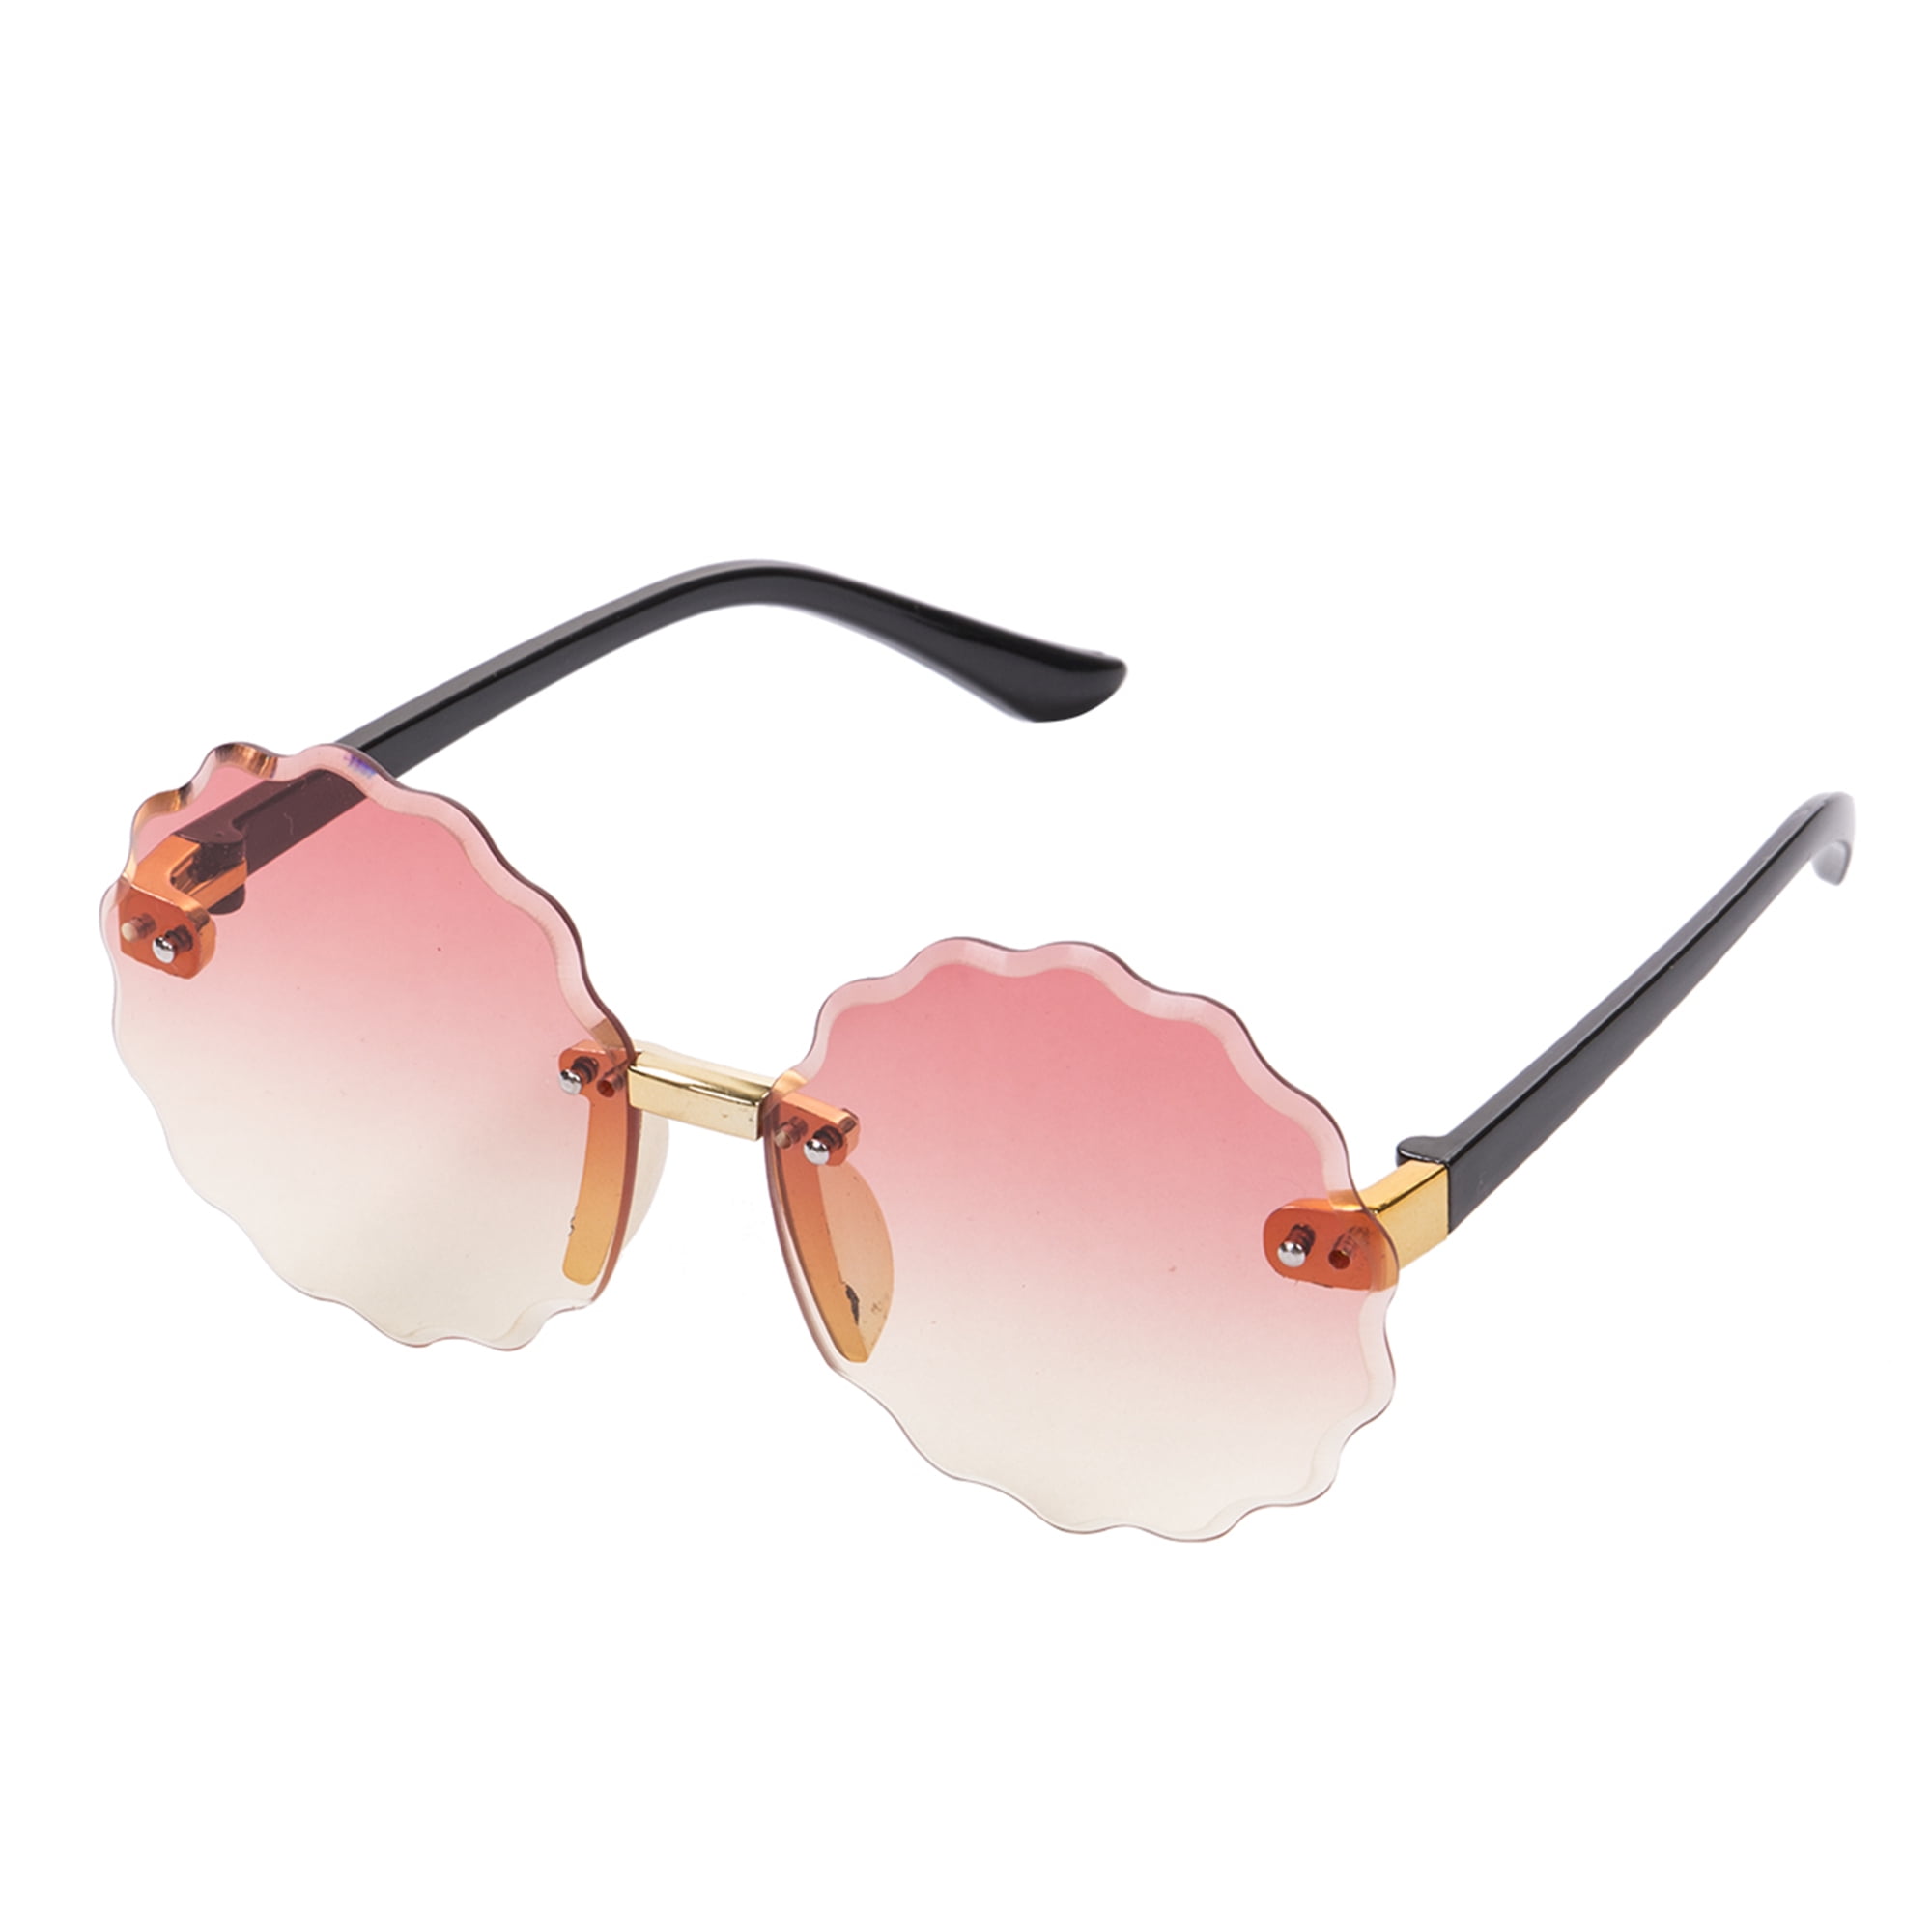 Fashion Rimless Sunglasses Women Glasses Butterfly Heart Cloud Summer Shades